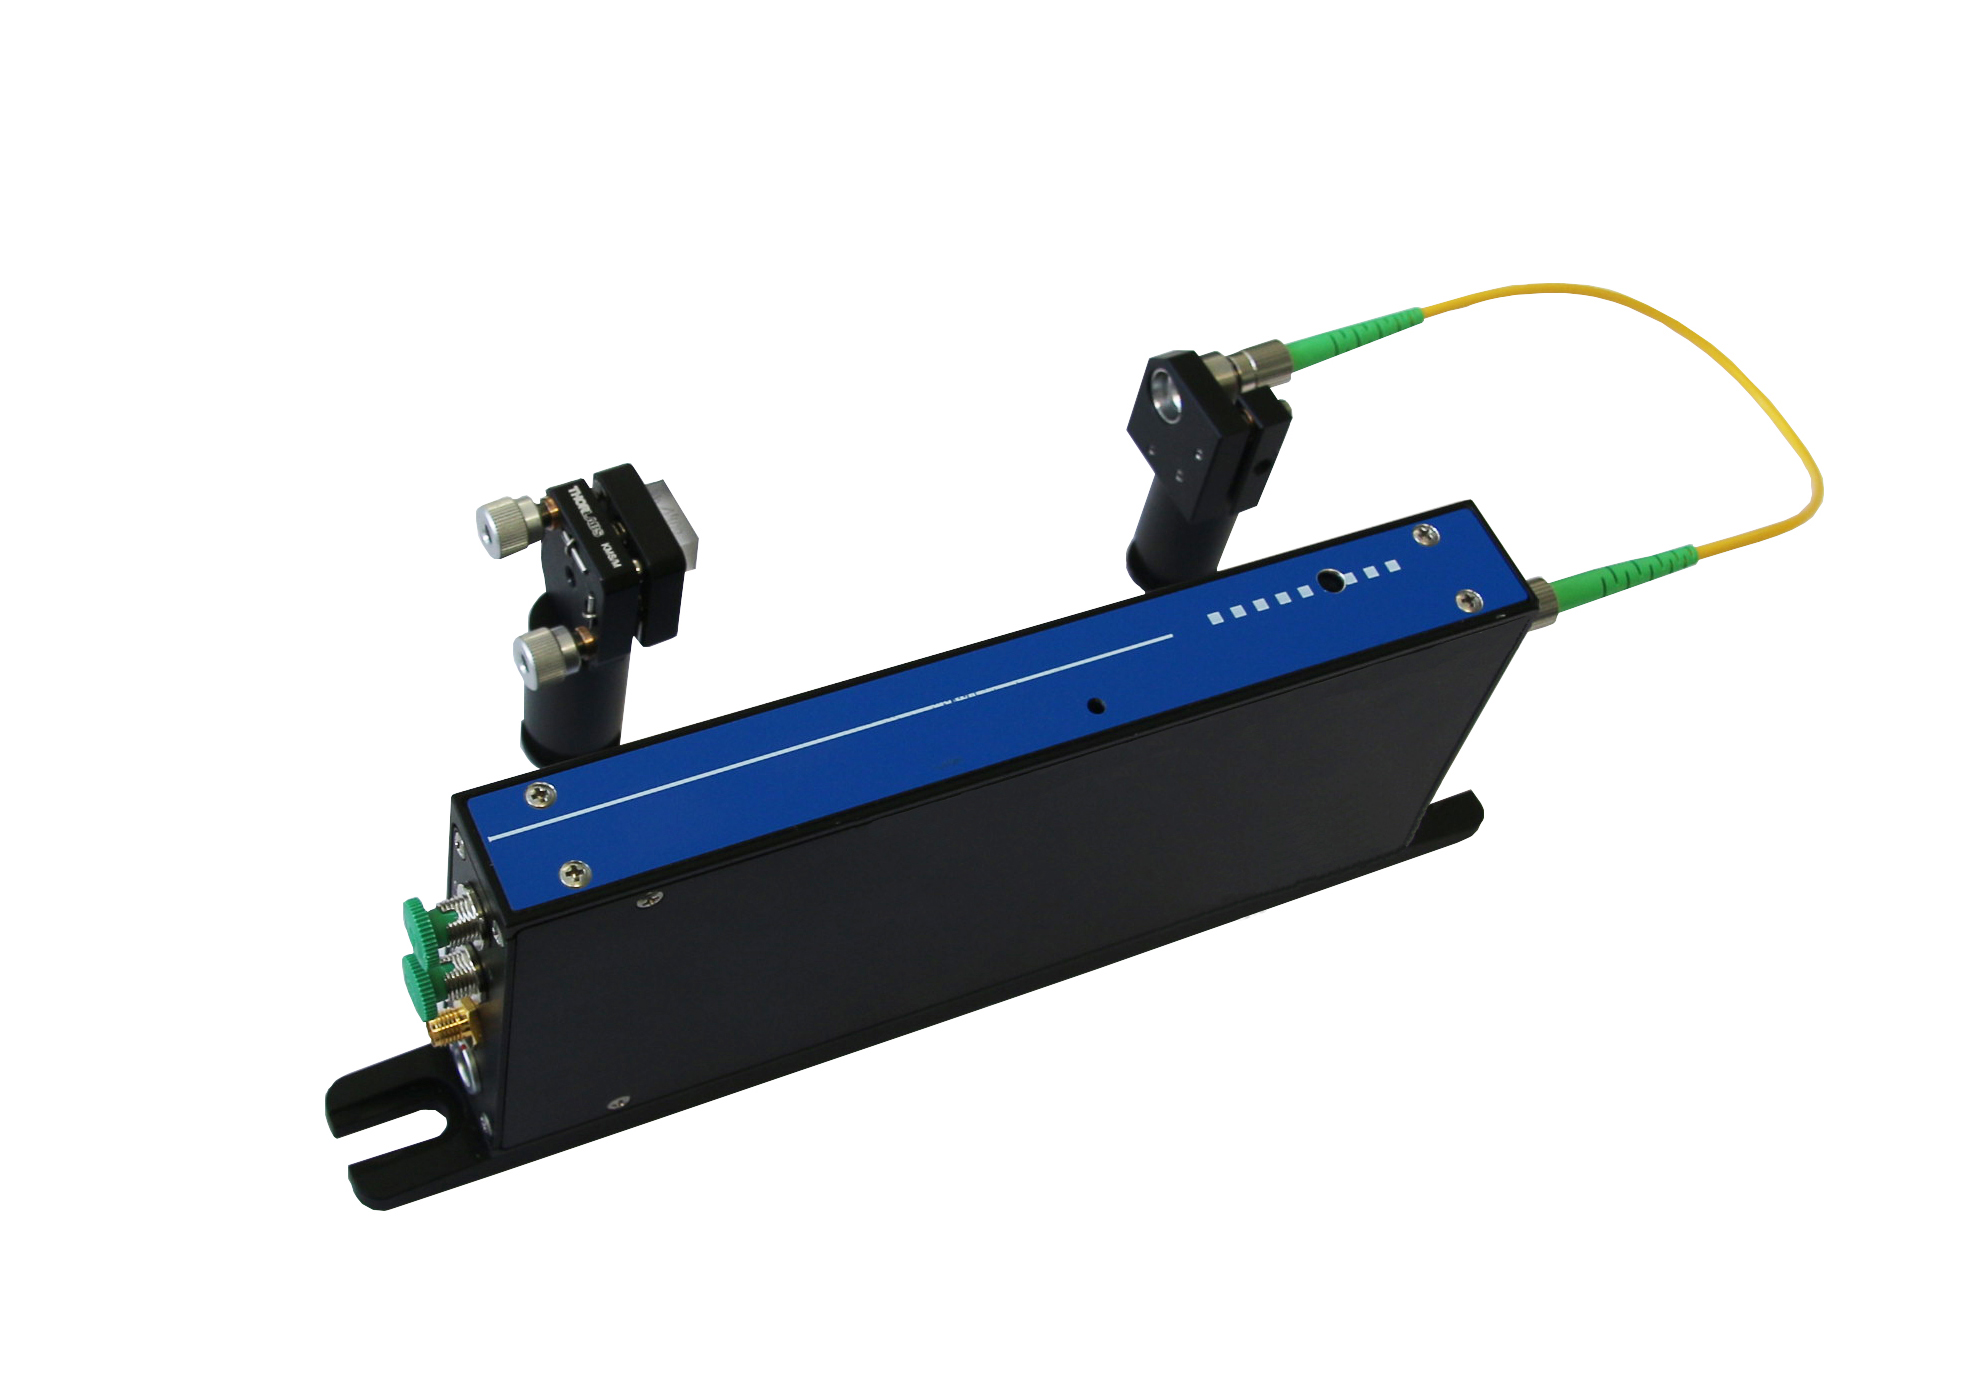 MENLO SYSTEMS-Ultrastable cw Lasers, Add-ons for Metrology_BDU-FG_025-3w.jpg